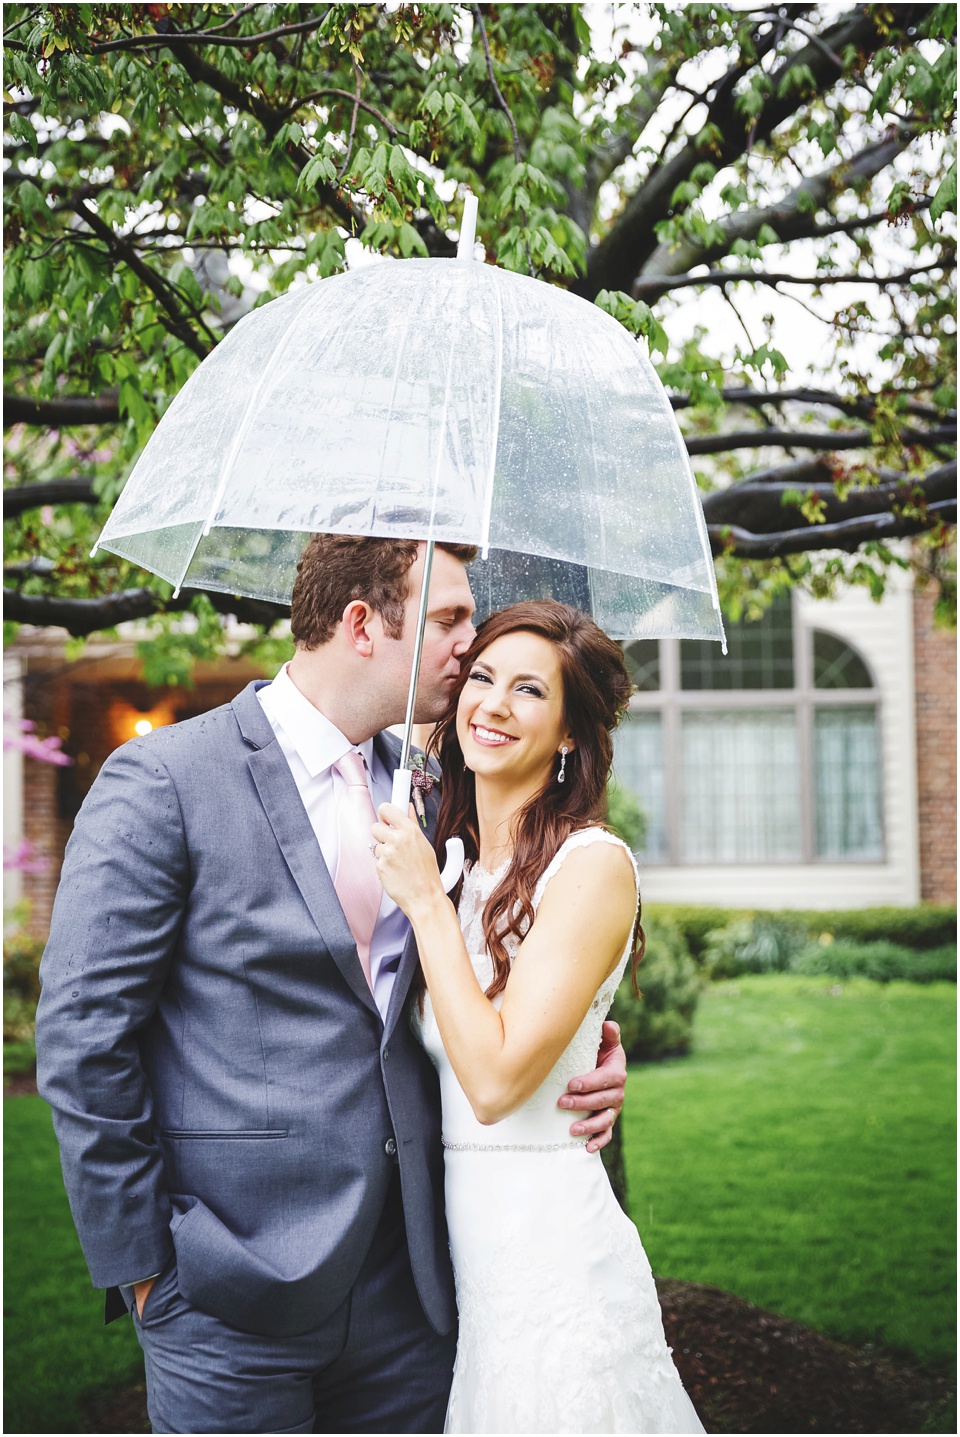 cathedral wedding photography, Groom kisses bride under umbrella.